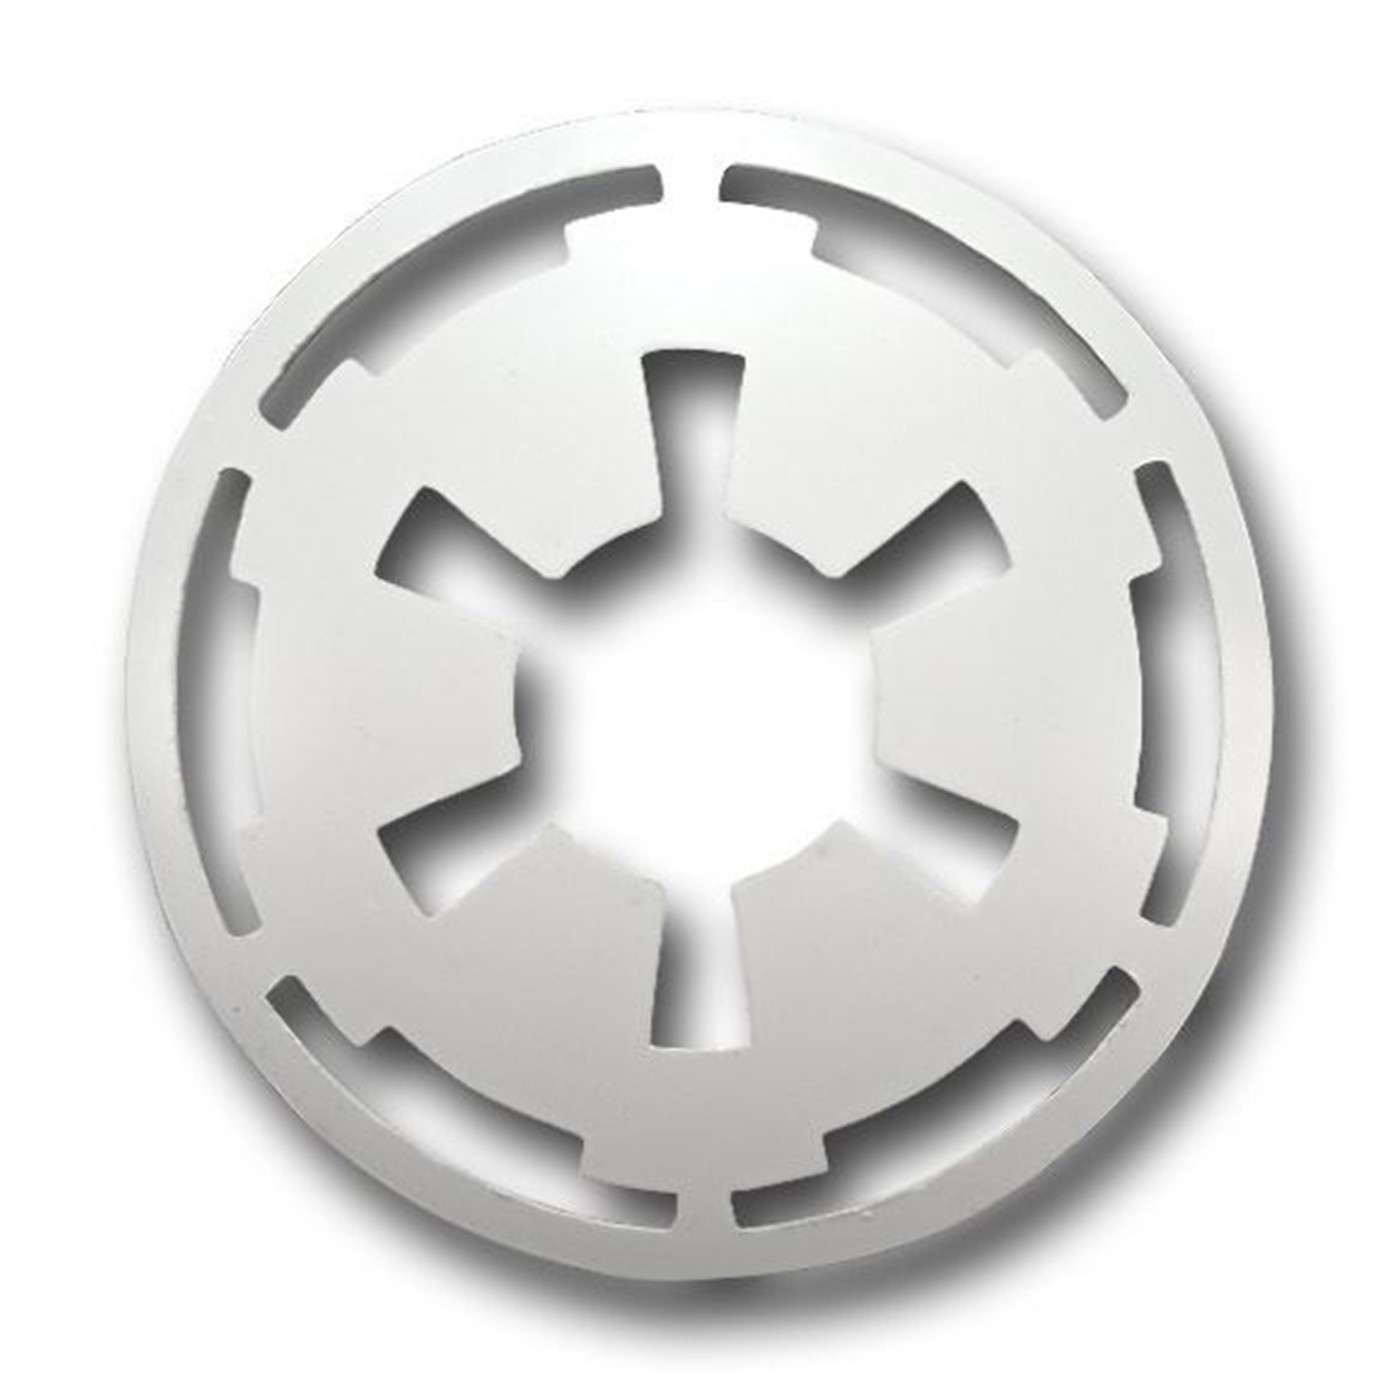 Star Wars White Imperial Symbol Belt Buckle